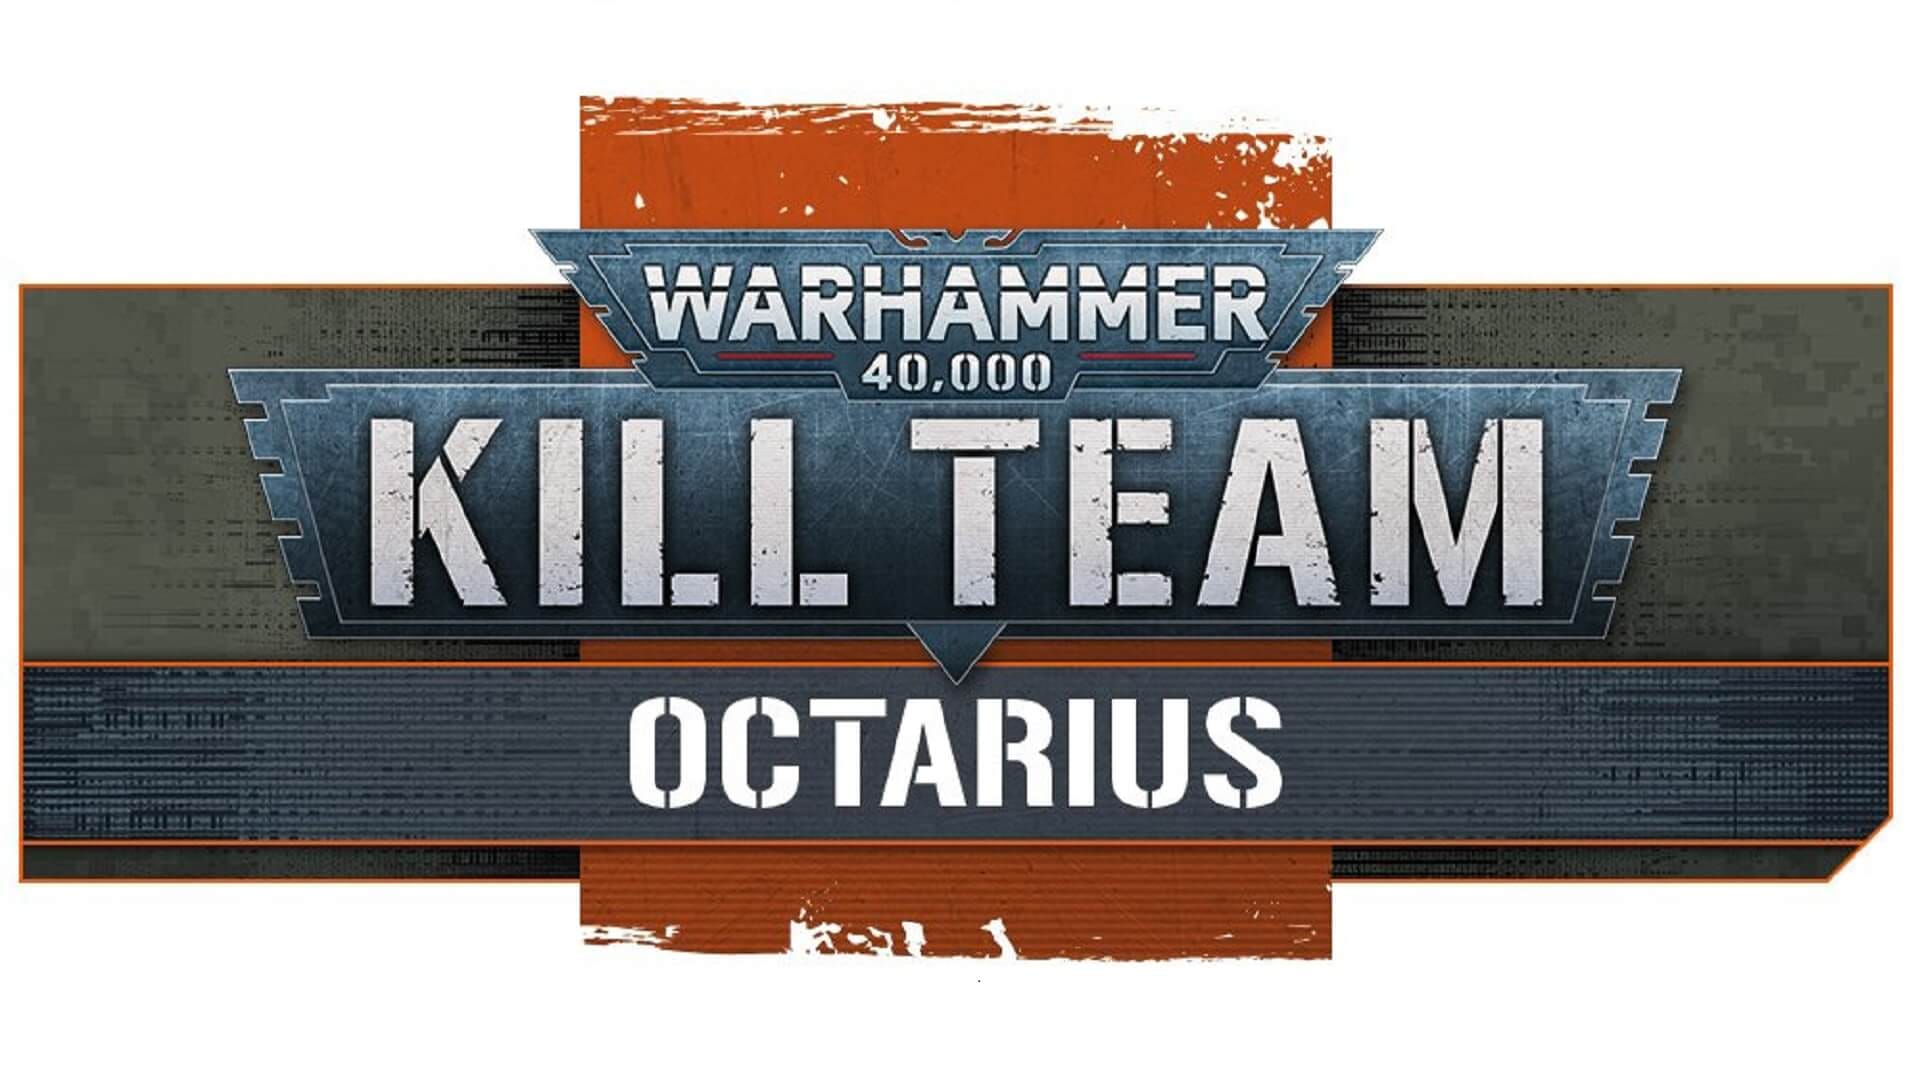 Kill Team Octarius